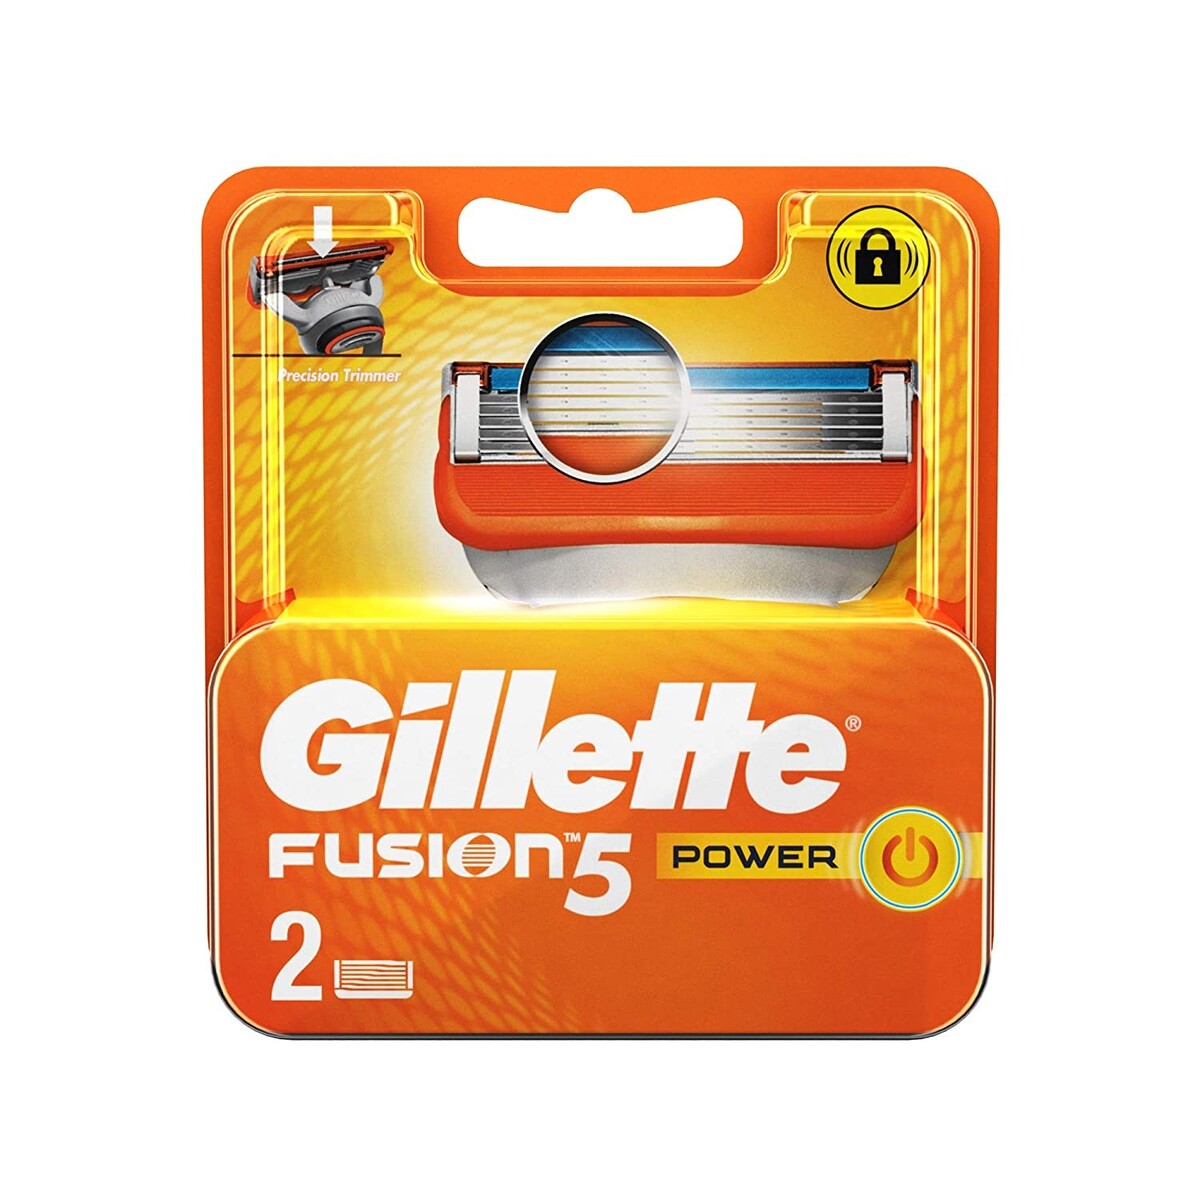 Gillette Cartridge Fusion Power 2's